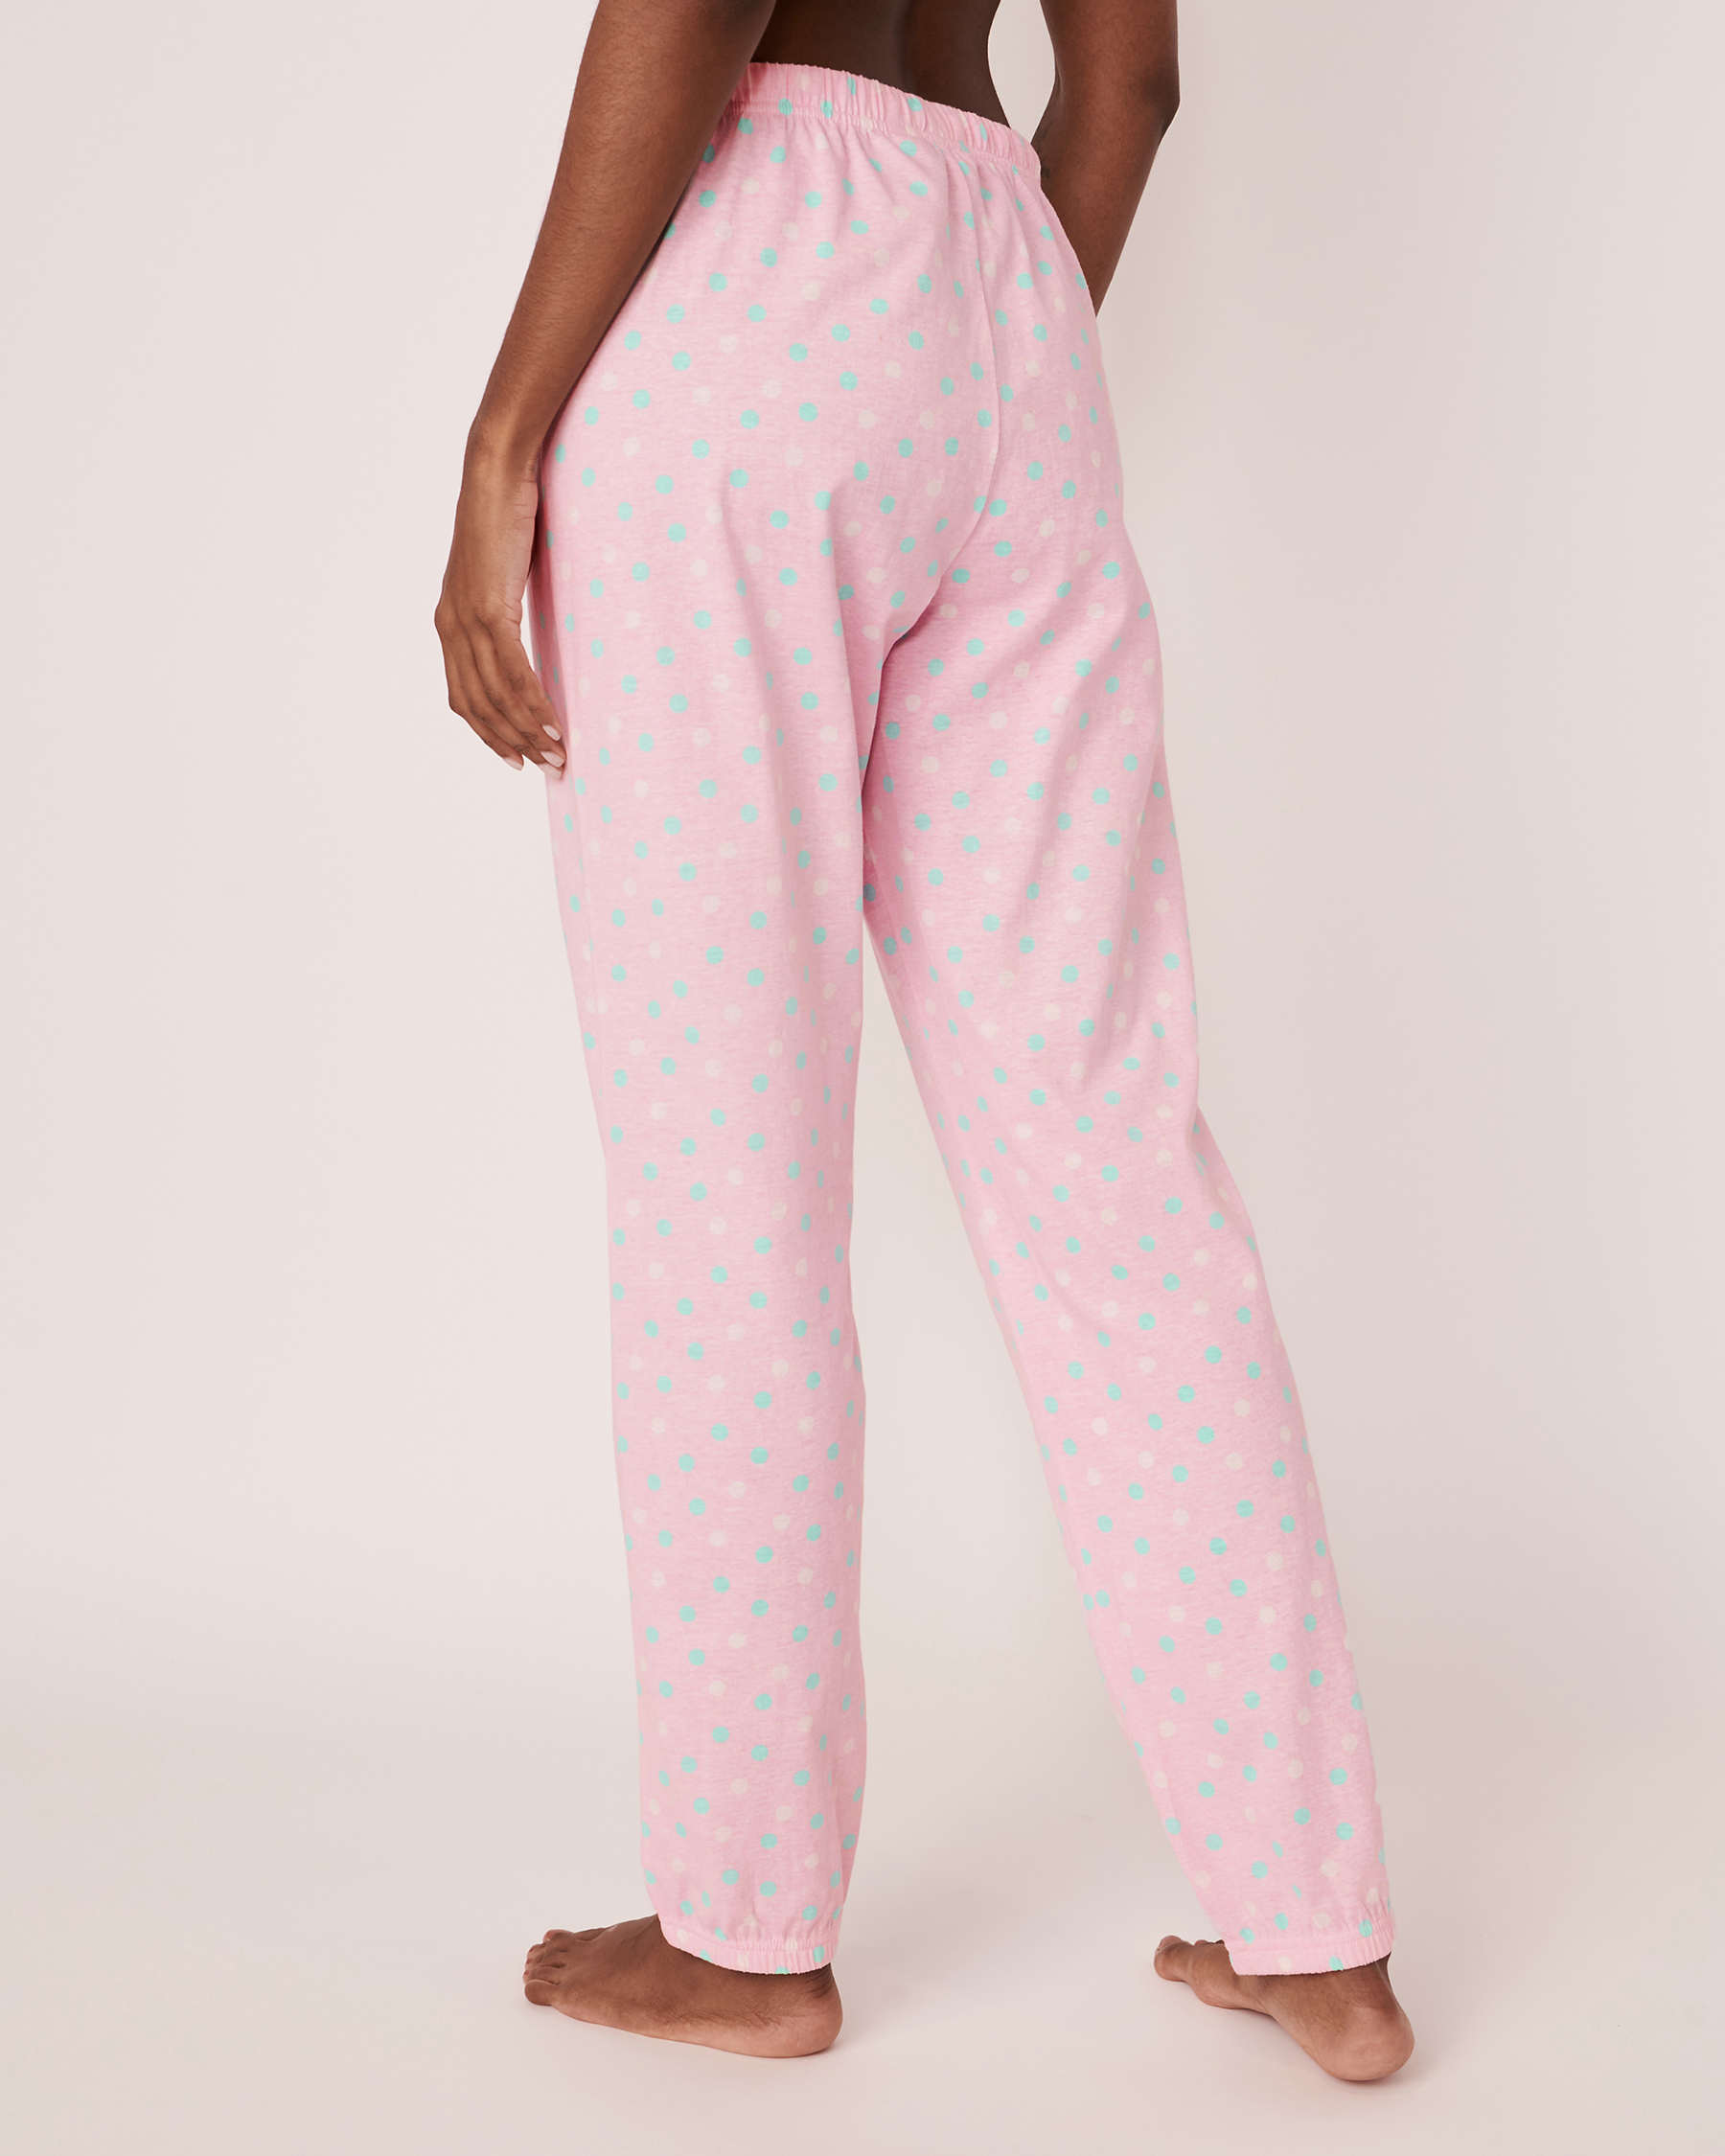 LA VIE EN ROSE Fitted Ankle Pyjama Pants Pink dots 40200232 - View2